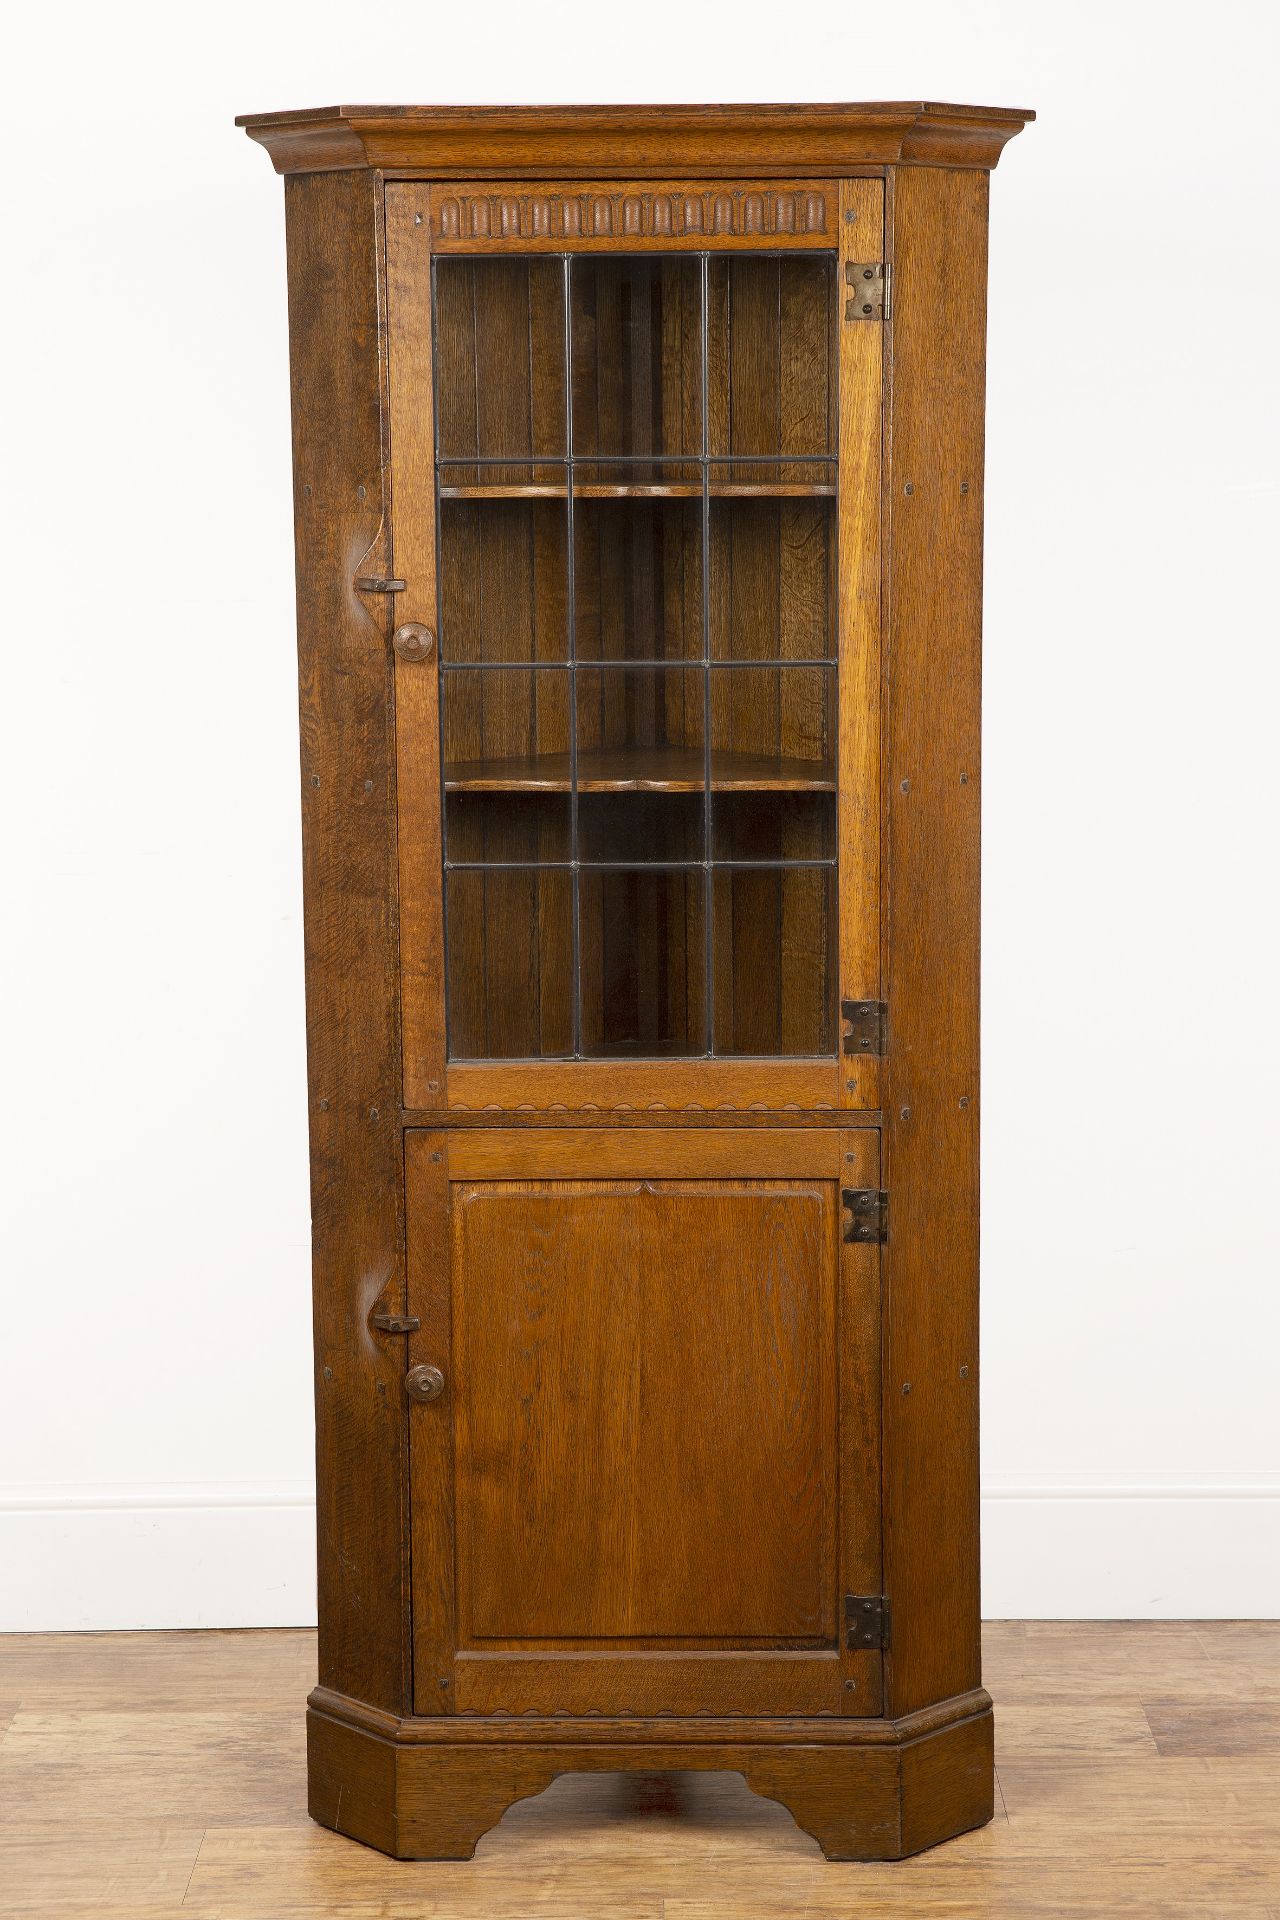 Yorkshire School oak, corner display cabinet, with astragal glazed door above a fielded panel